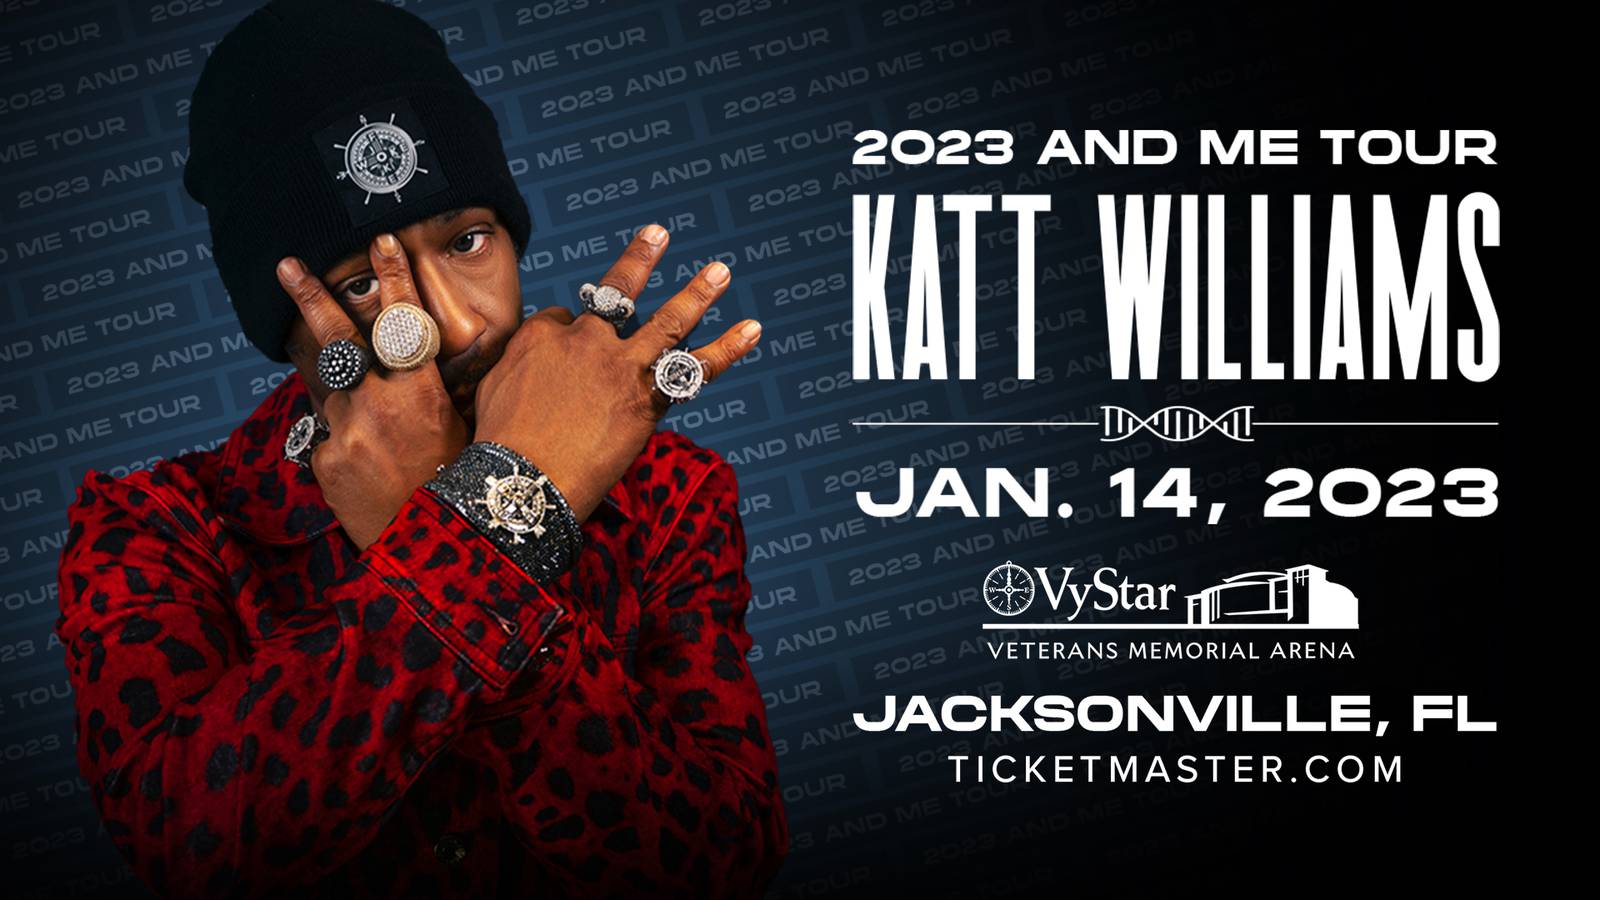 If you’re heading to Katt Williams’ Jacksonville show on Saturday, plan